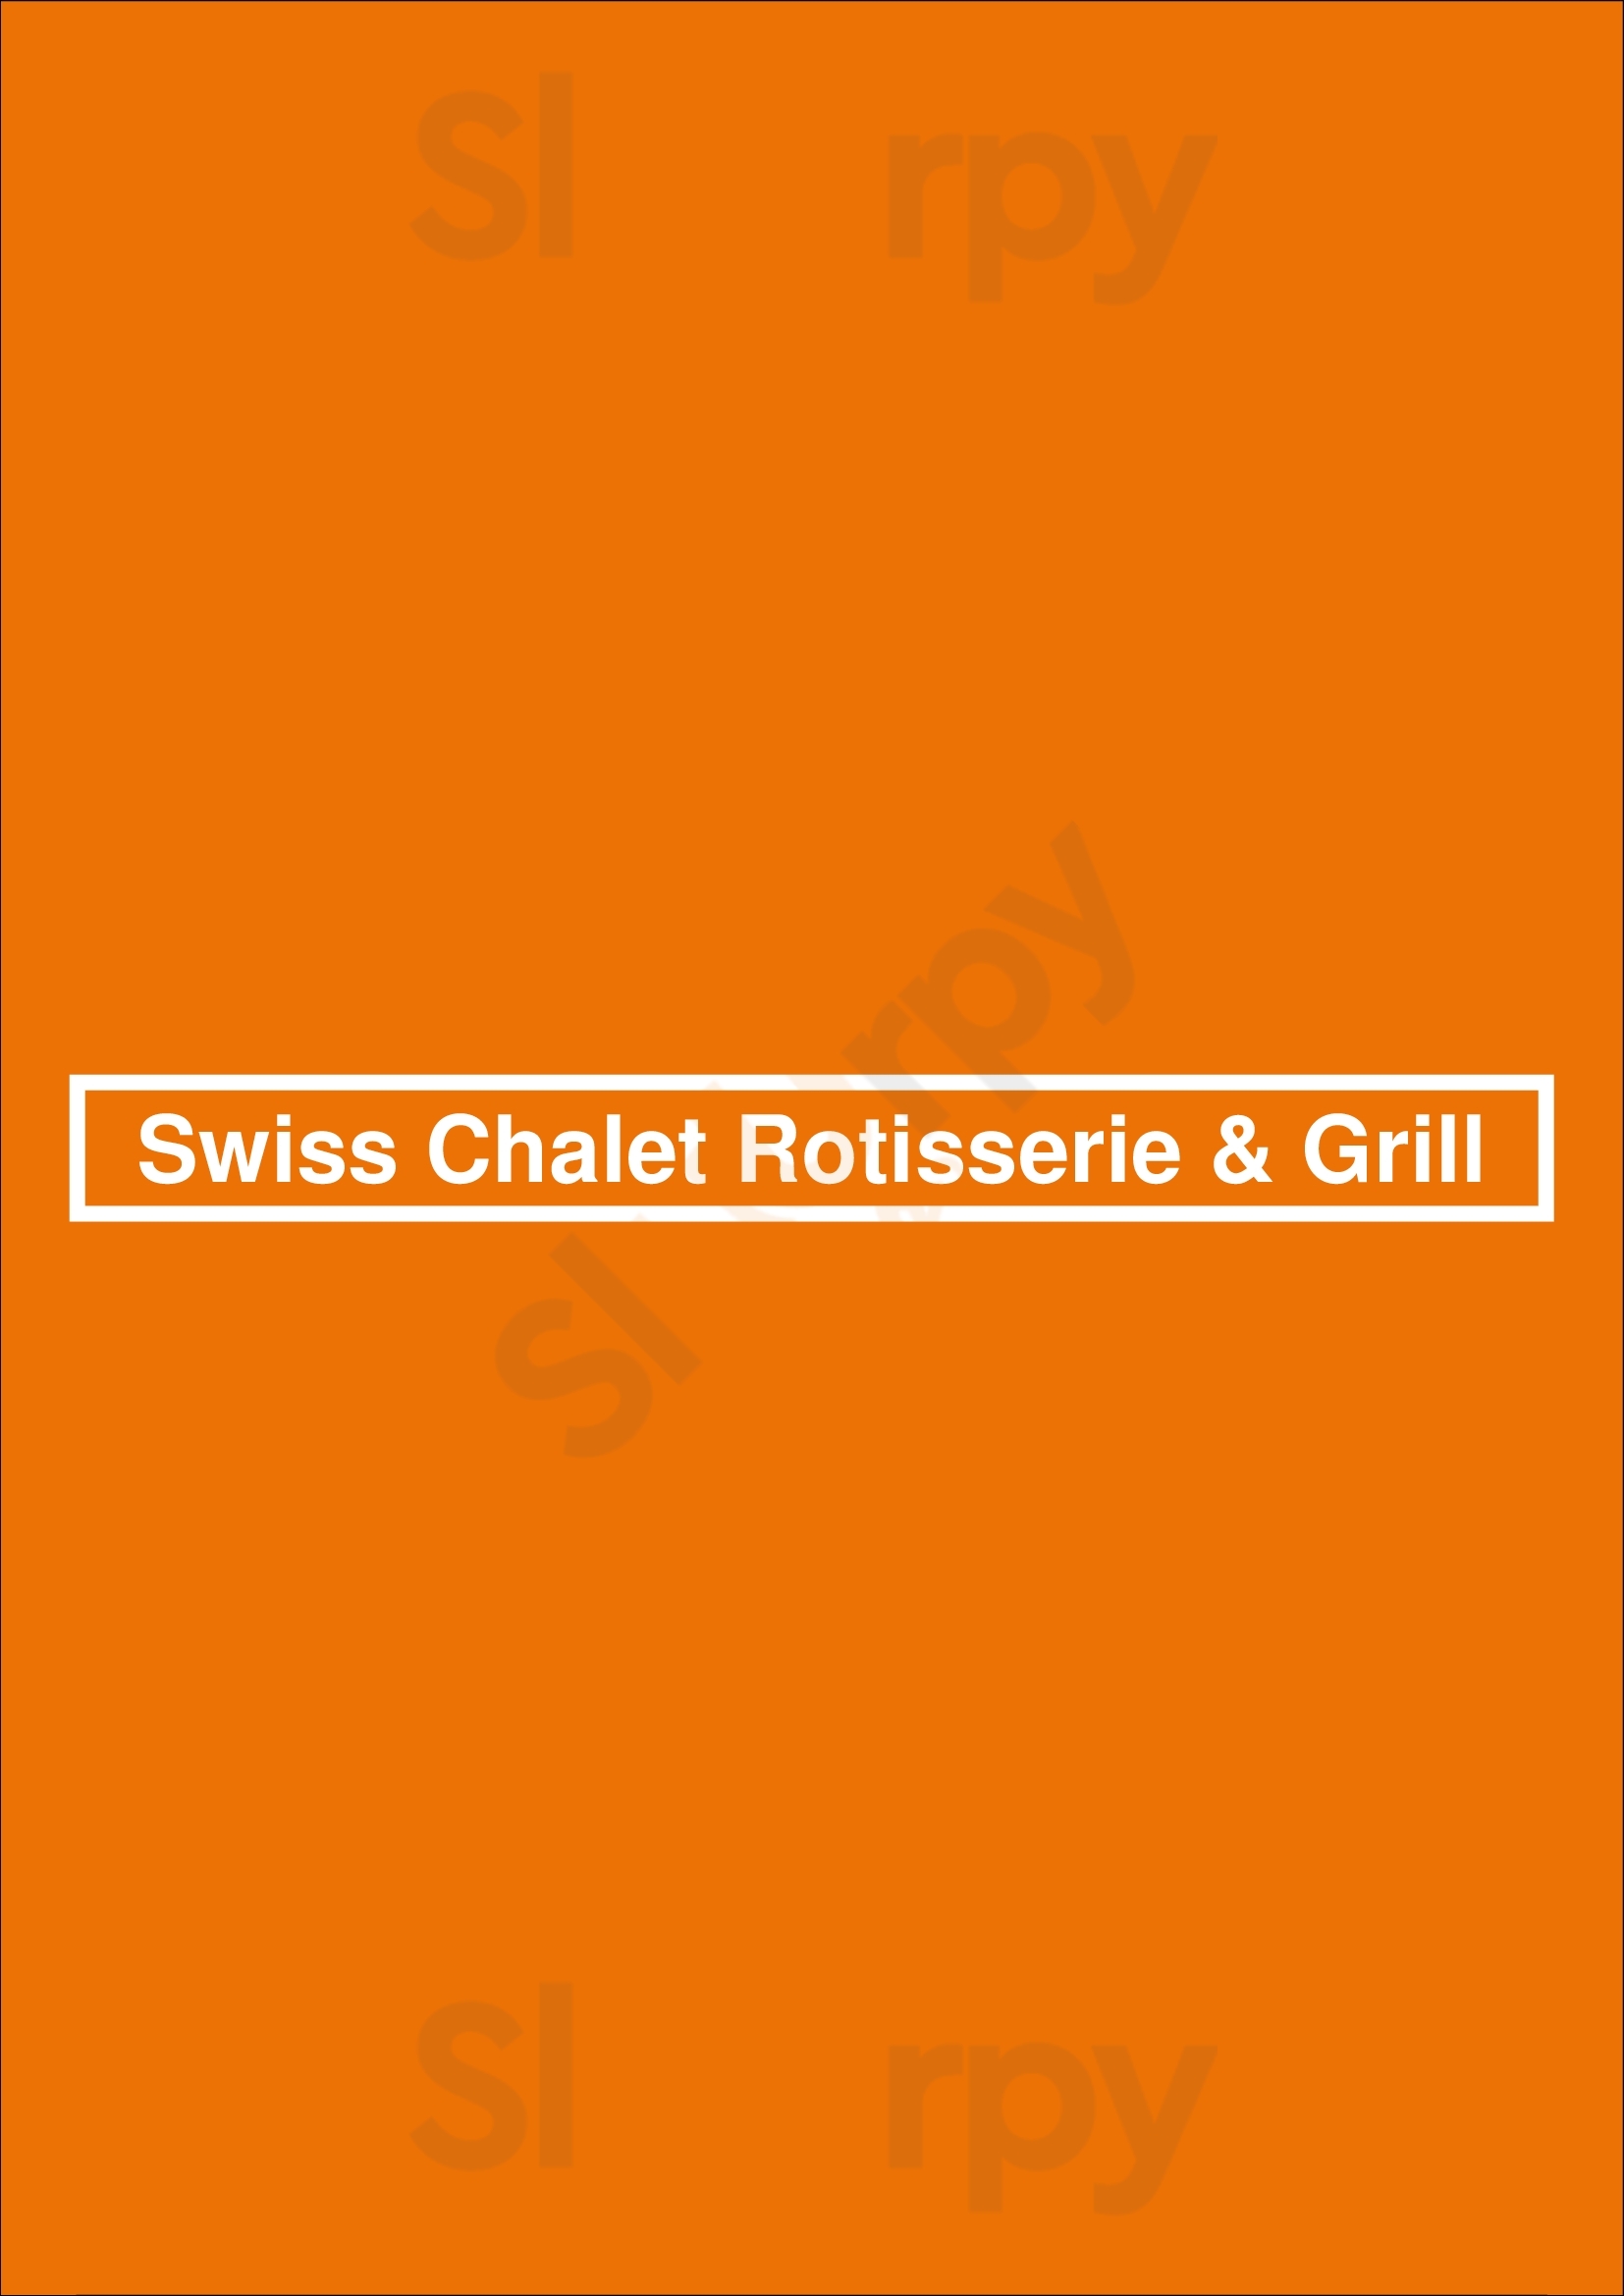 Swiss Chalet Rotisserie & Grill Airdrie Menu - 1